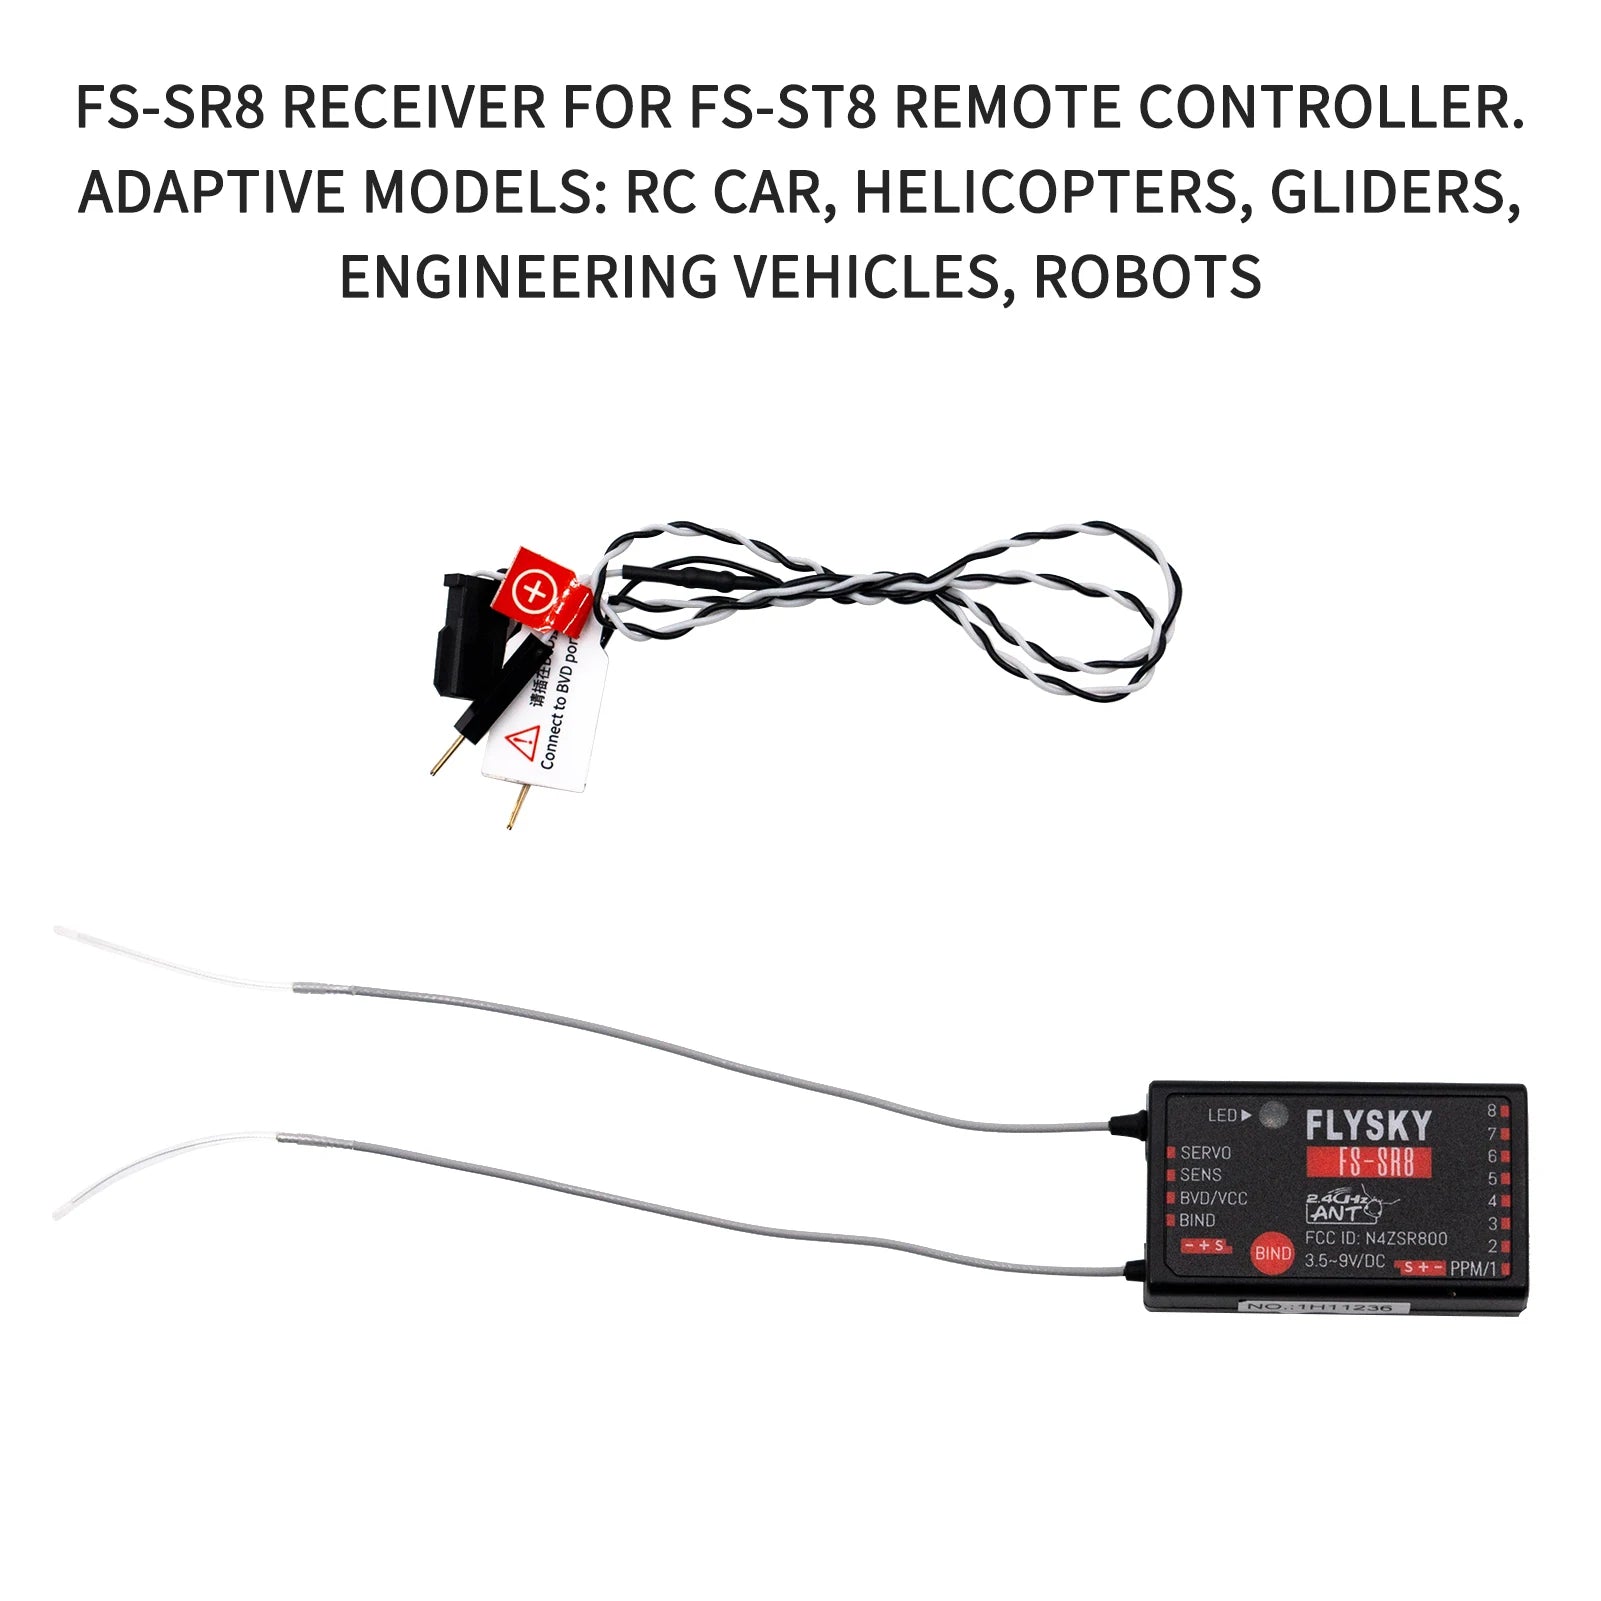 FLYSKY FS-SR8 2.4G 8CH Receiver, FLYSKY SERVO FS-SRB SENS BVD/VCC